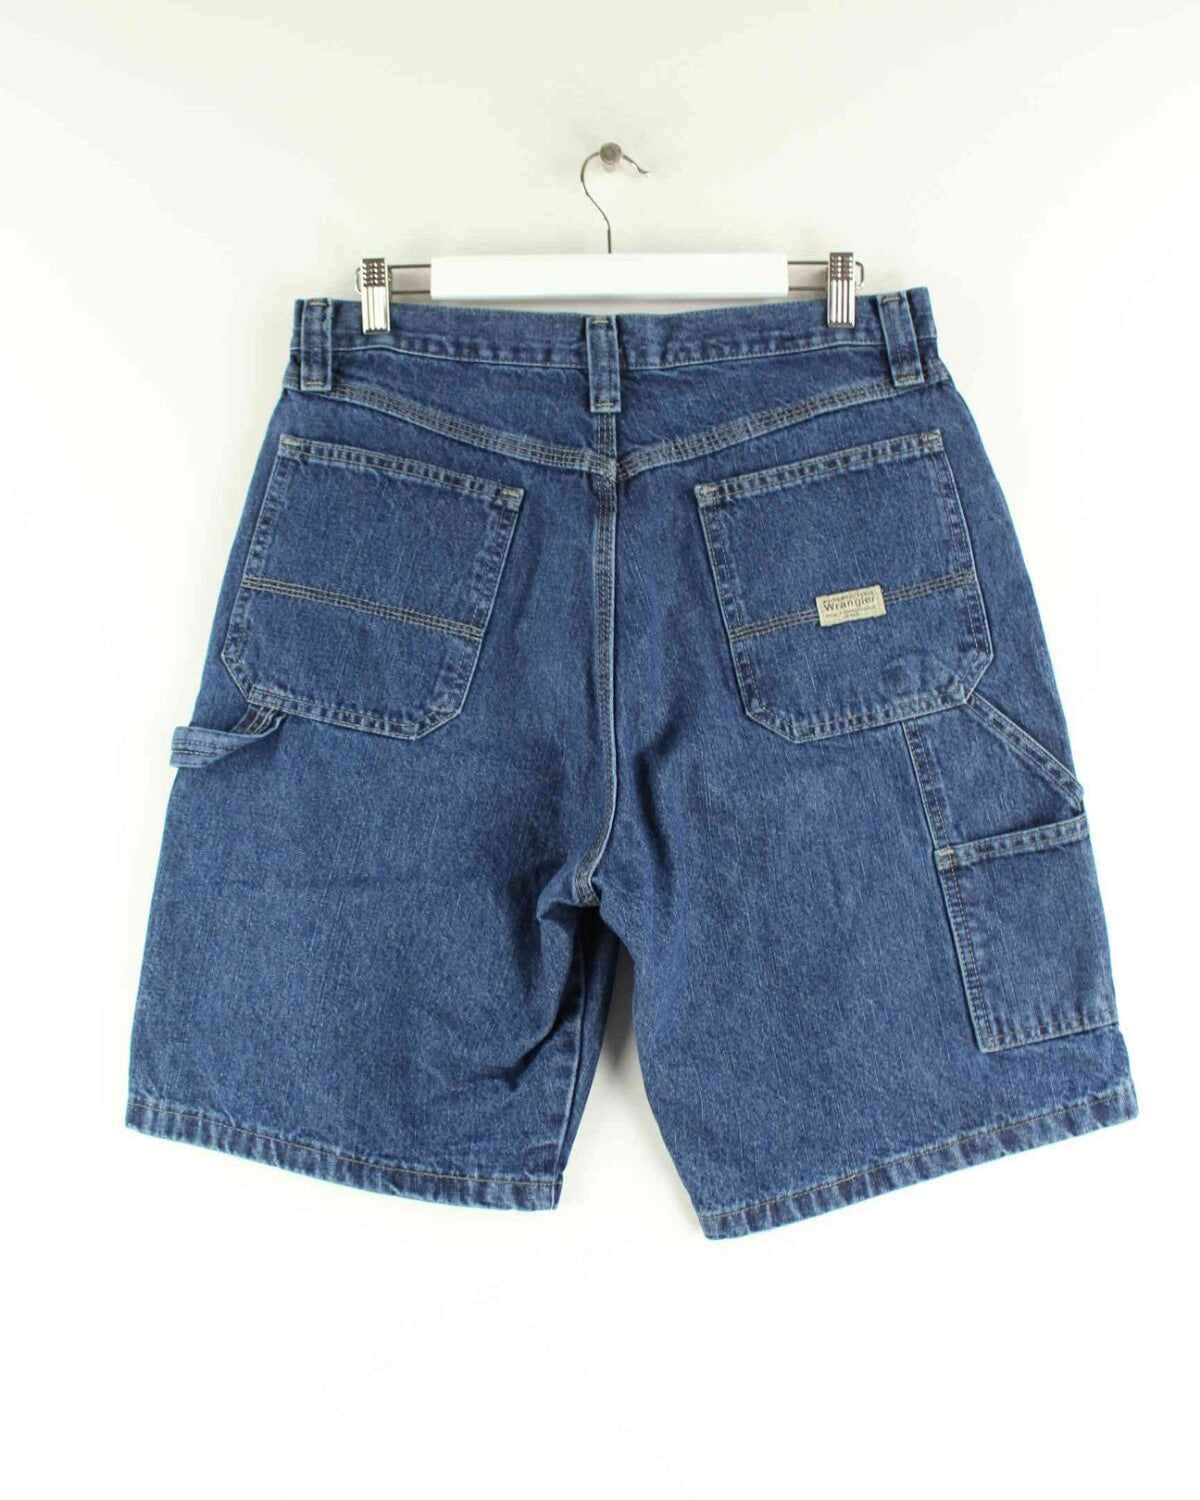 Wrangler Carpenter Jorts / Jeans Shorts Blau W32 (back image)